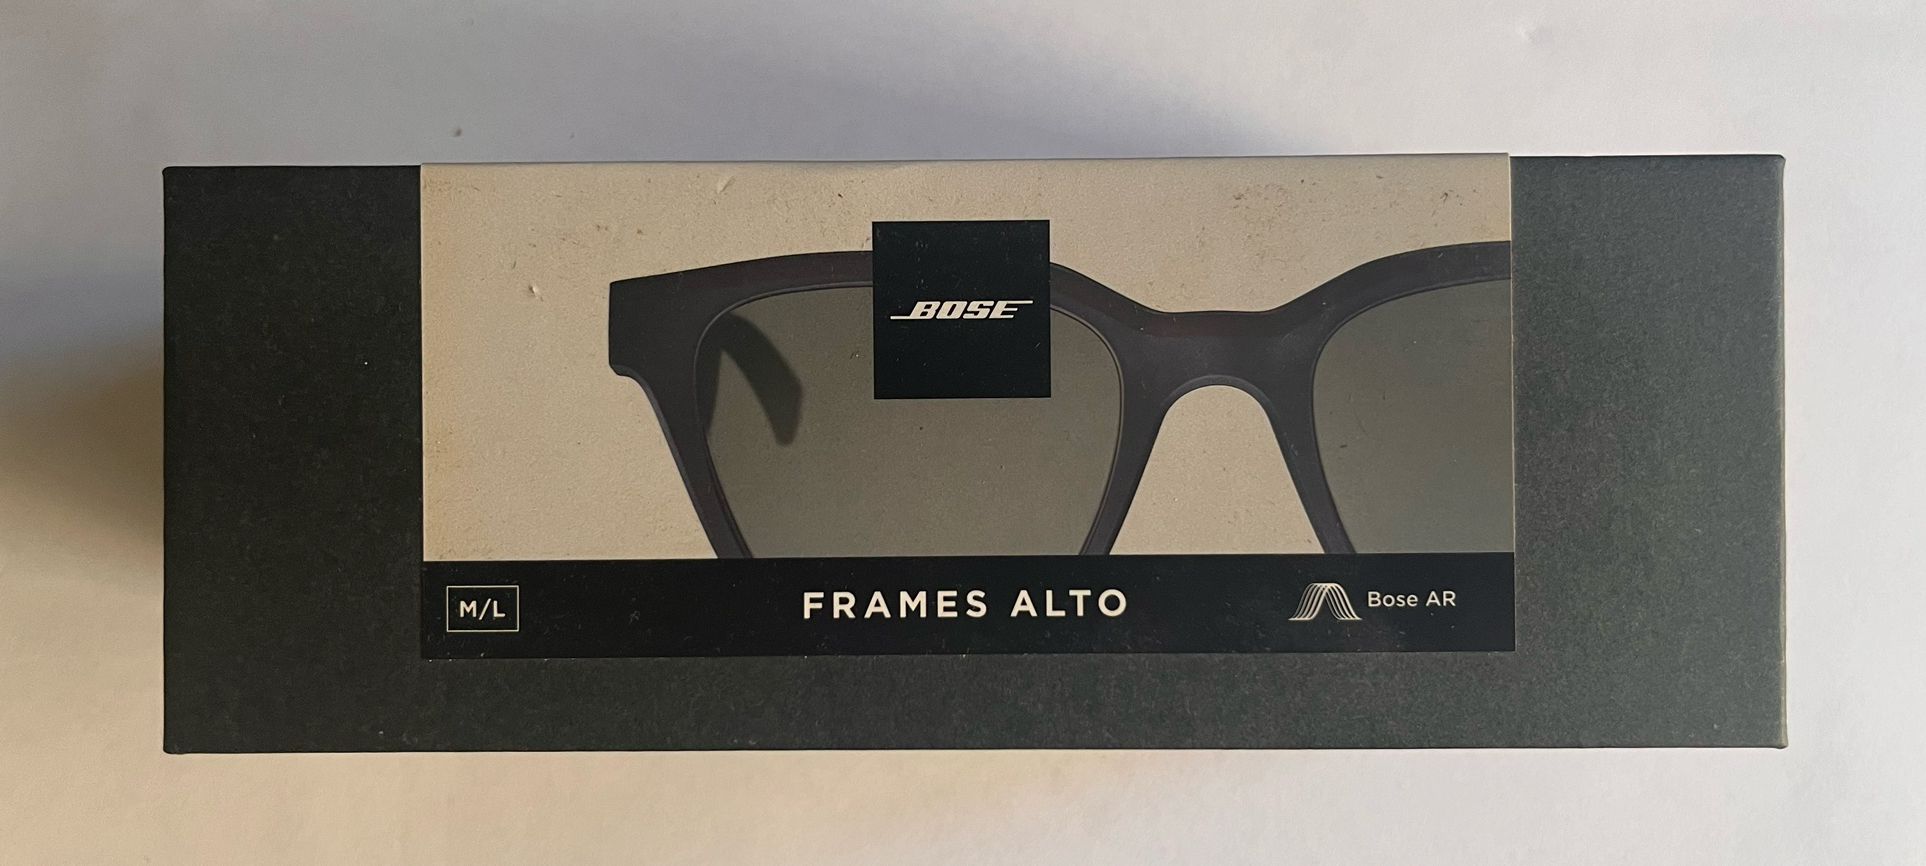 Bose Frames Alto With Audio Bluetooth